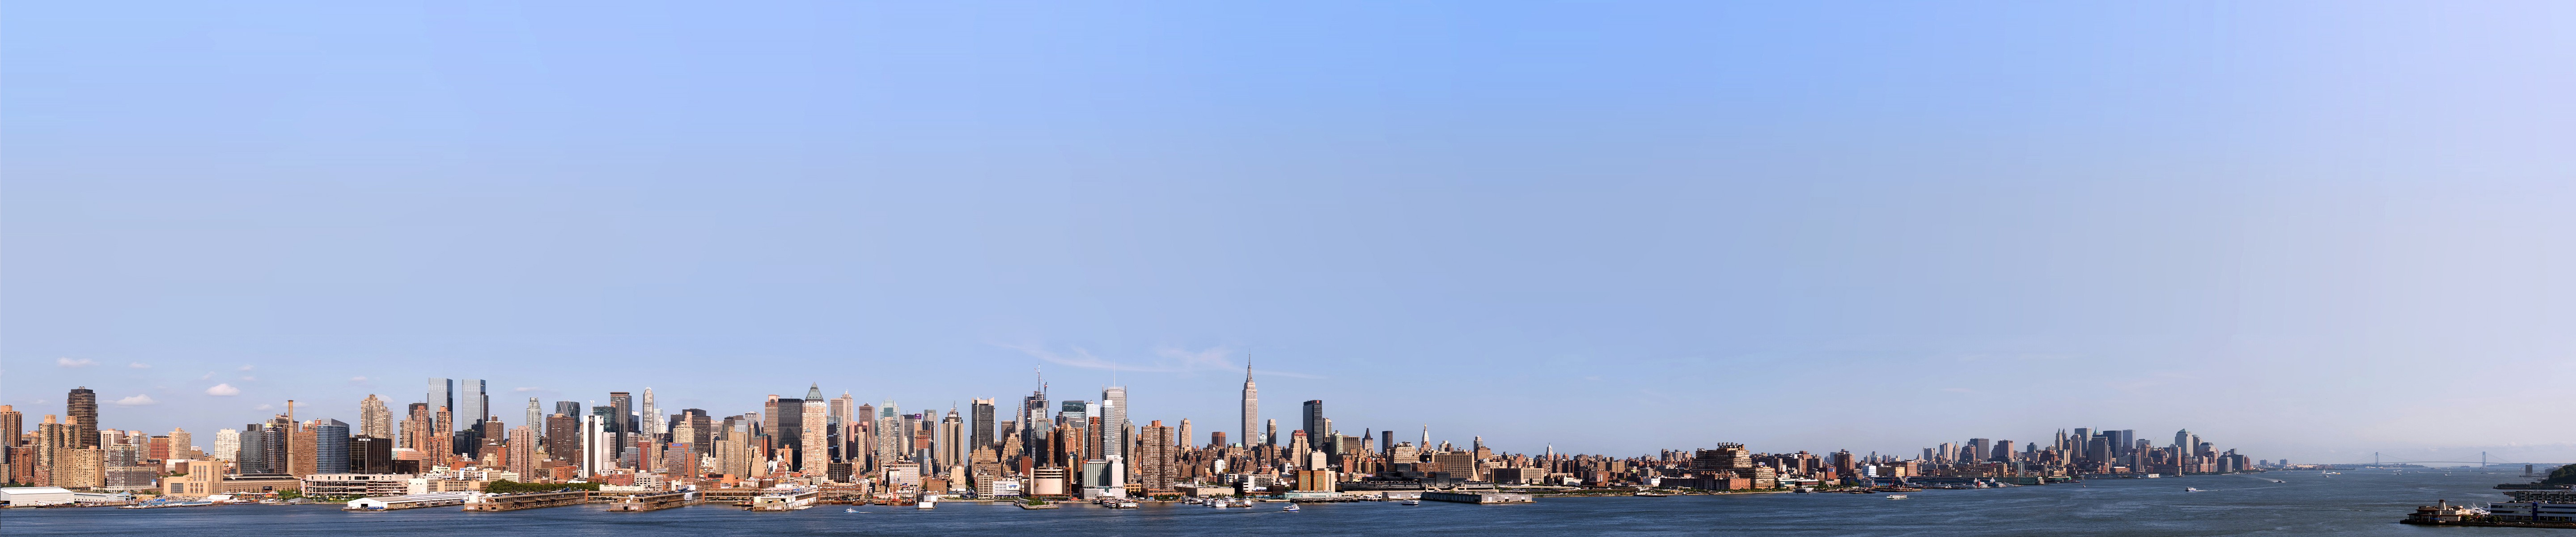 General 5760x1200 New York City triple screen wide angle cityscape Manhattan harbor skyscraper panorama skyline USA multiple display